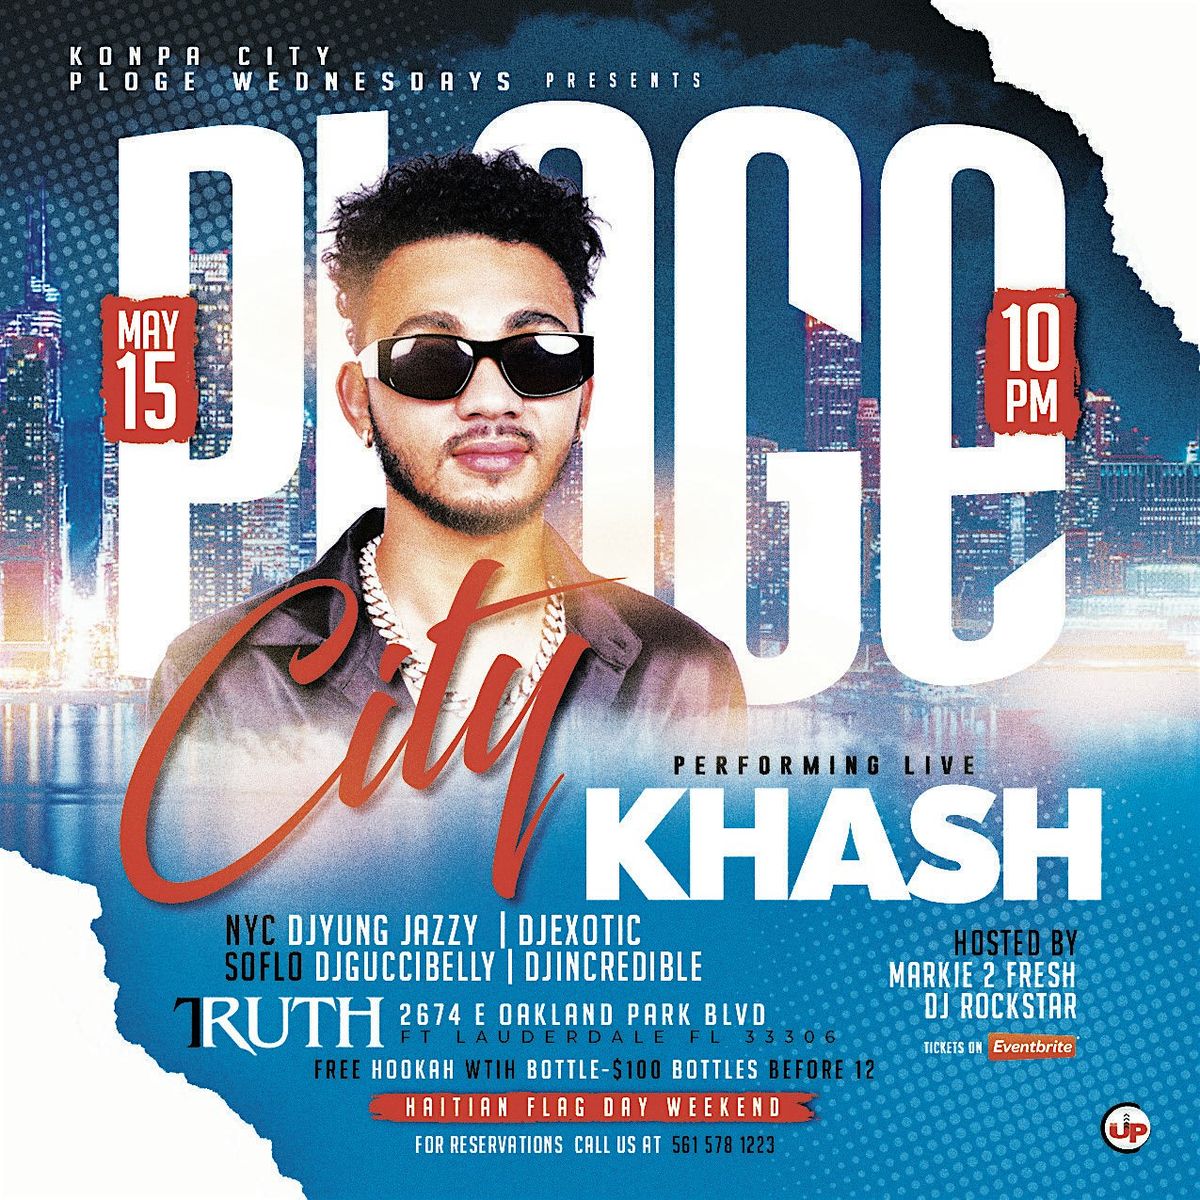 Ploge City - Ft. Khash Performing Live